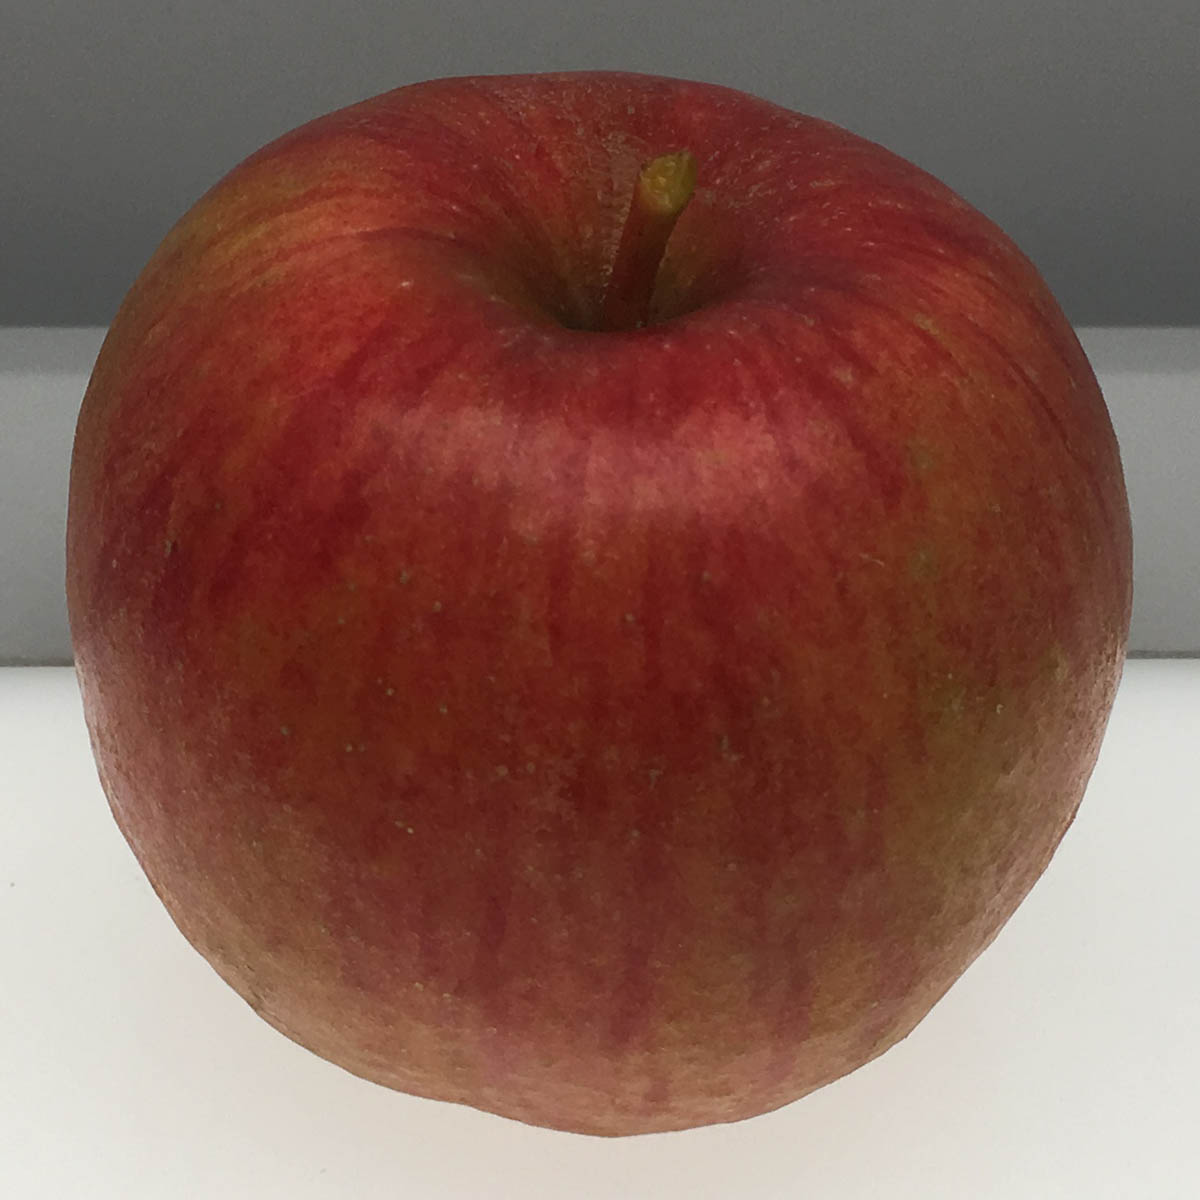 Hunt Russet apple